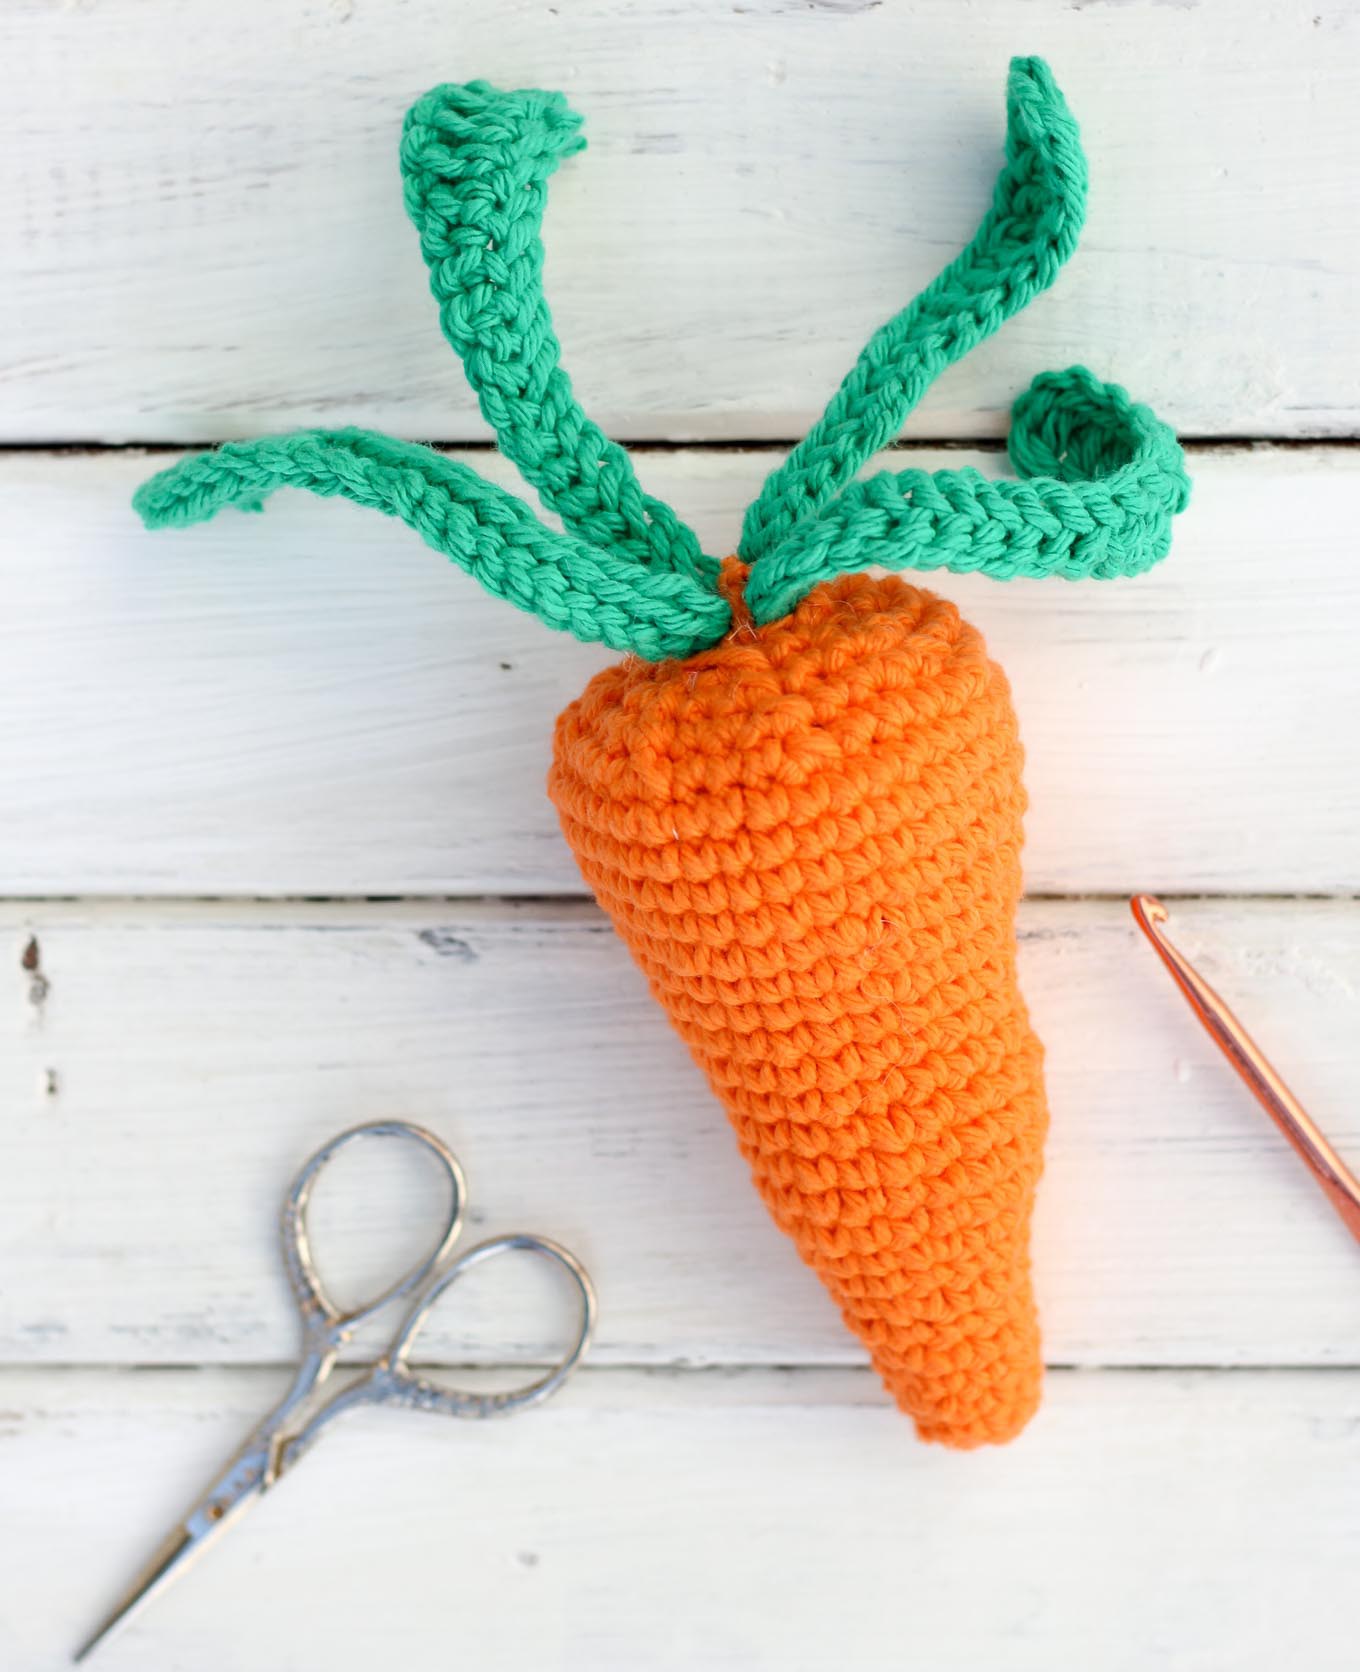 DIY crochet carrot toy